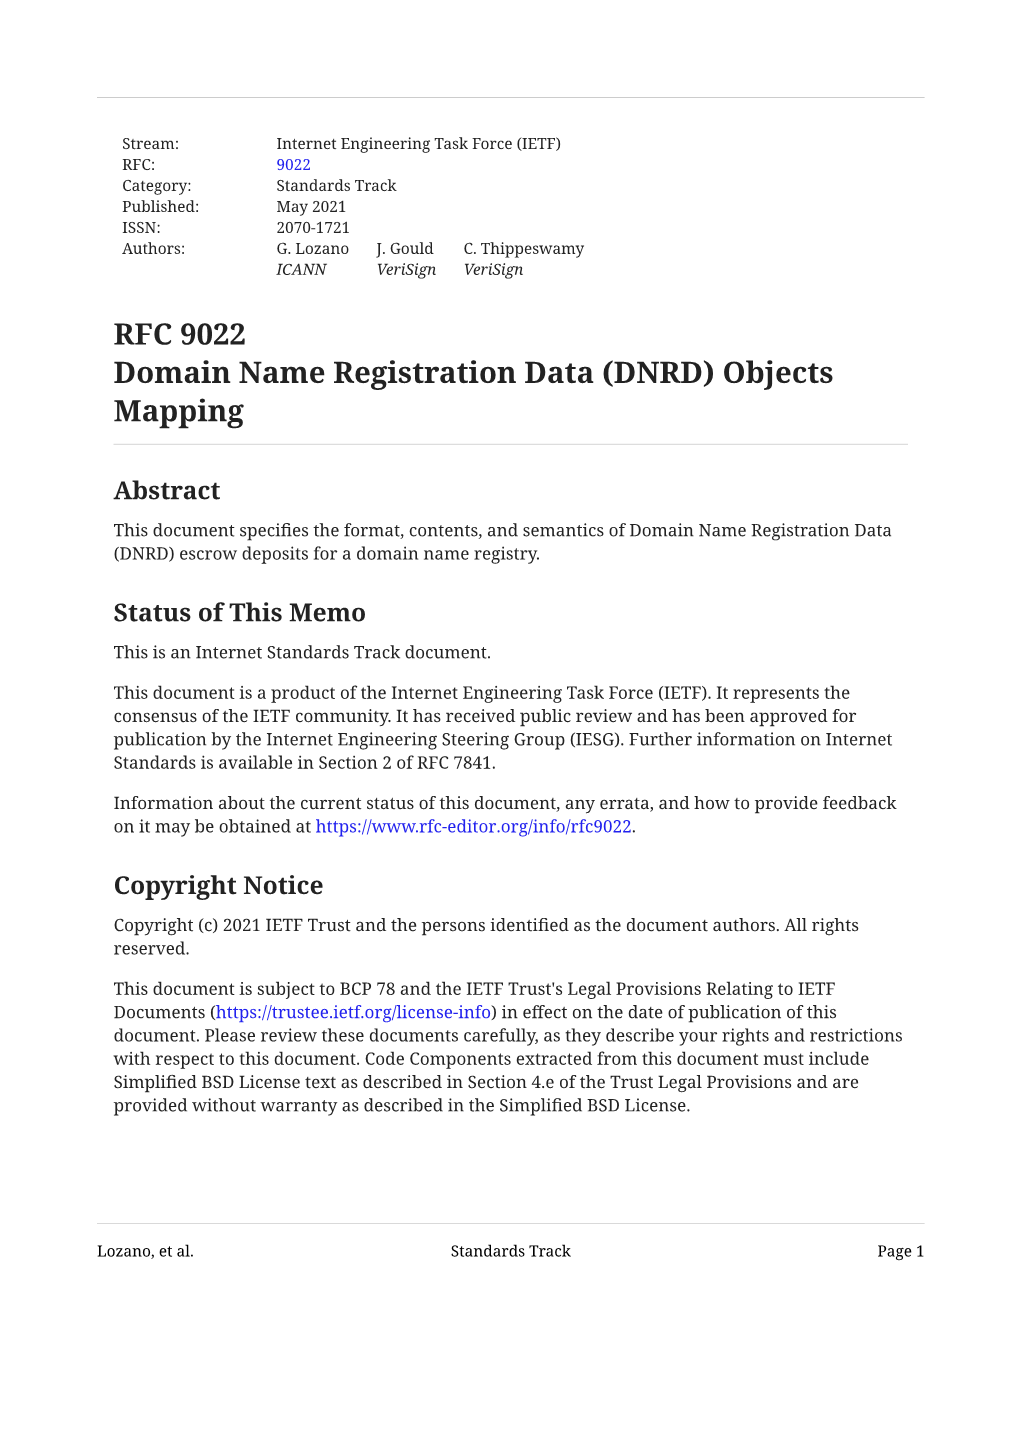 RFC 9022: Domain Name Registration Data (DNRD)